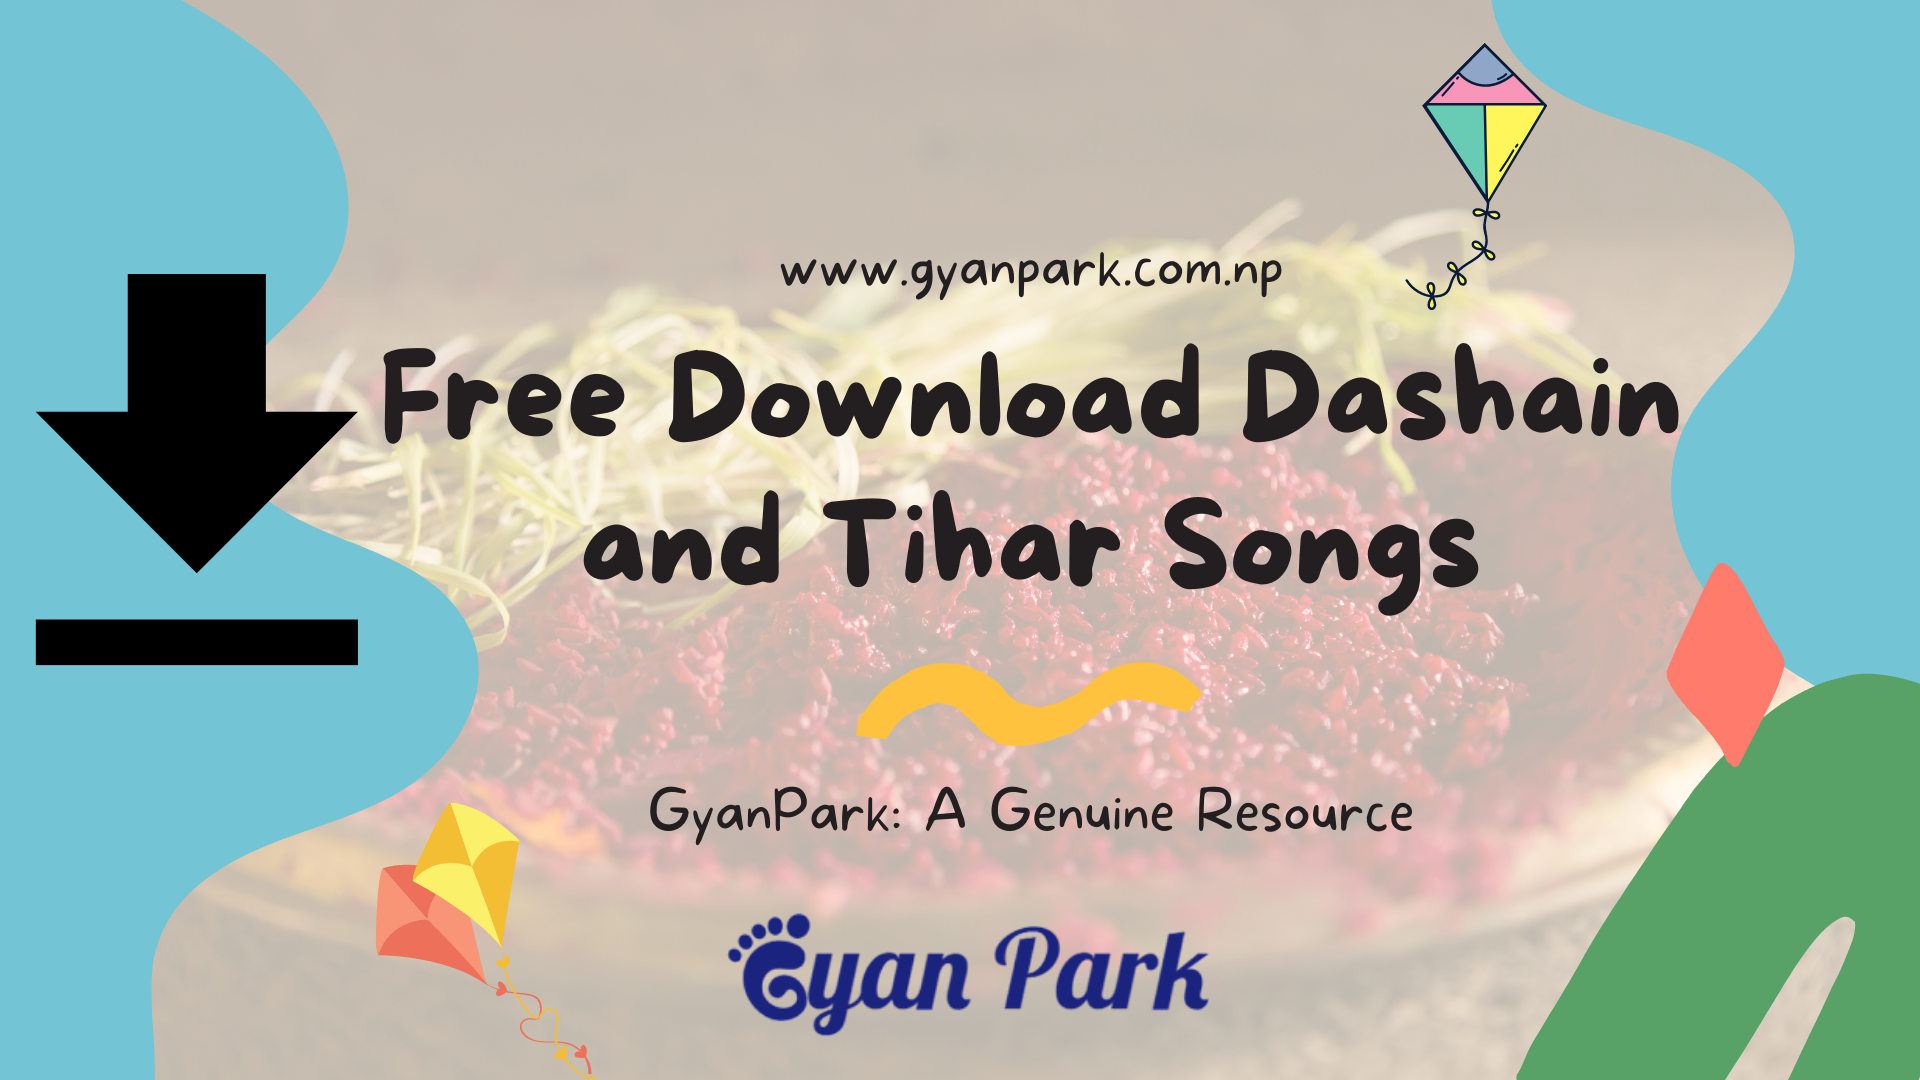 Free Dashain and Tihar Songs, Royalty Free Dashain and Tihar Songs for Youtube Videos, No Copyrights, Copyrights Free Dashain Tihar Songs.